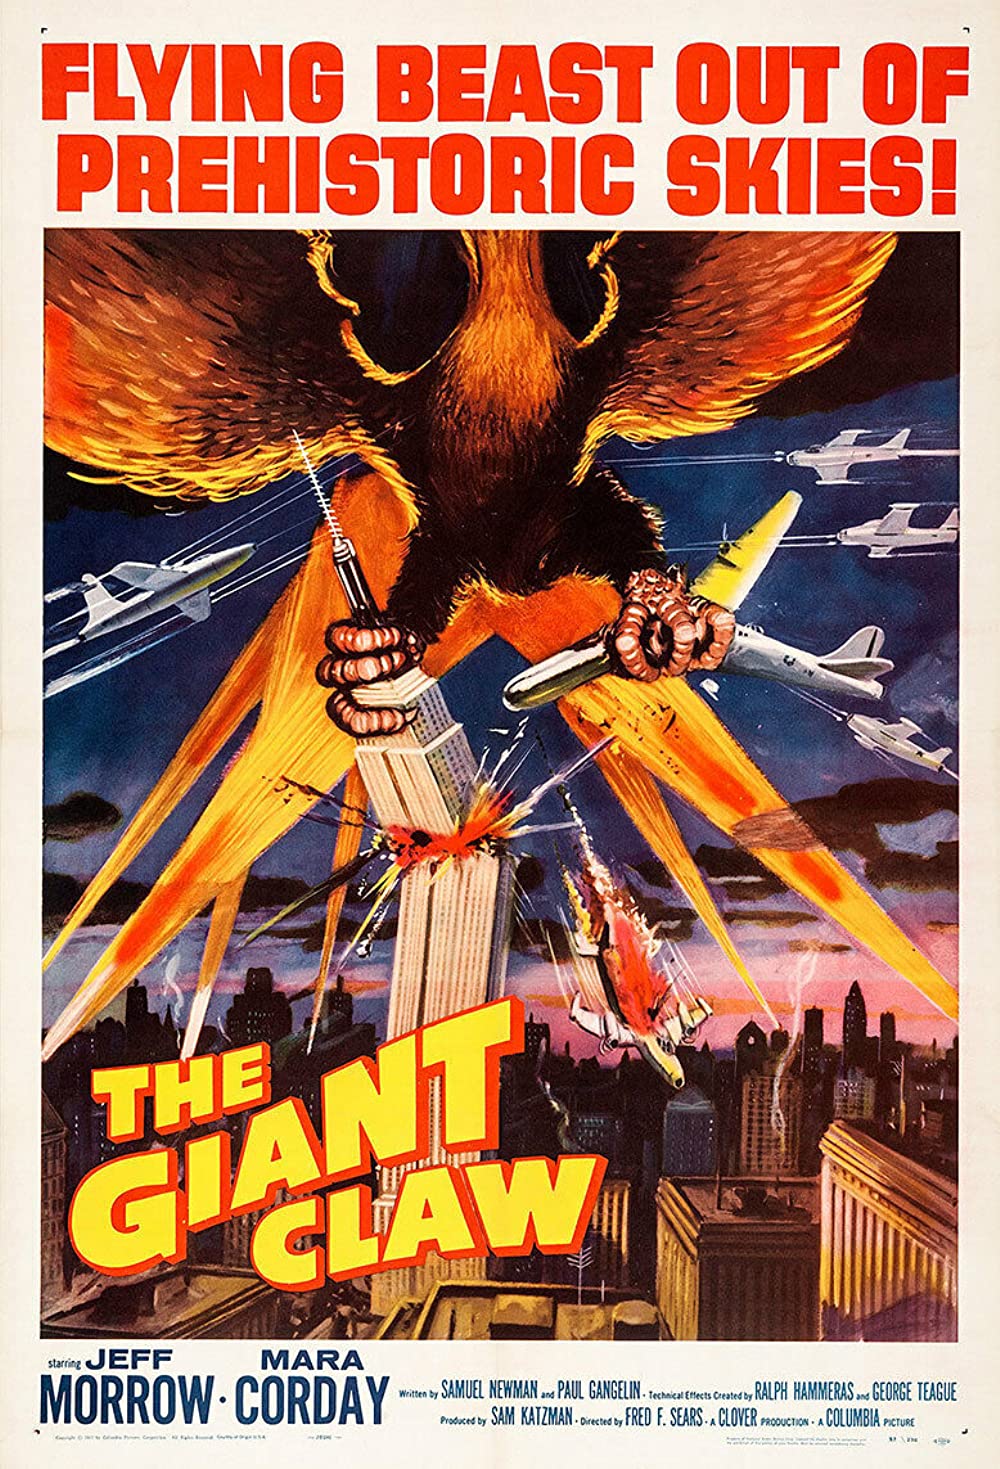 Filmbeschreibung zu The Giant Claw